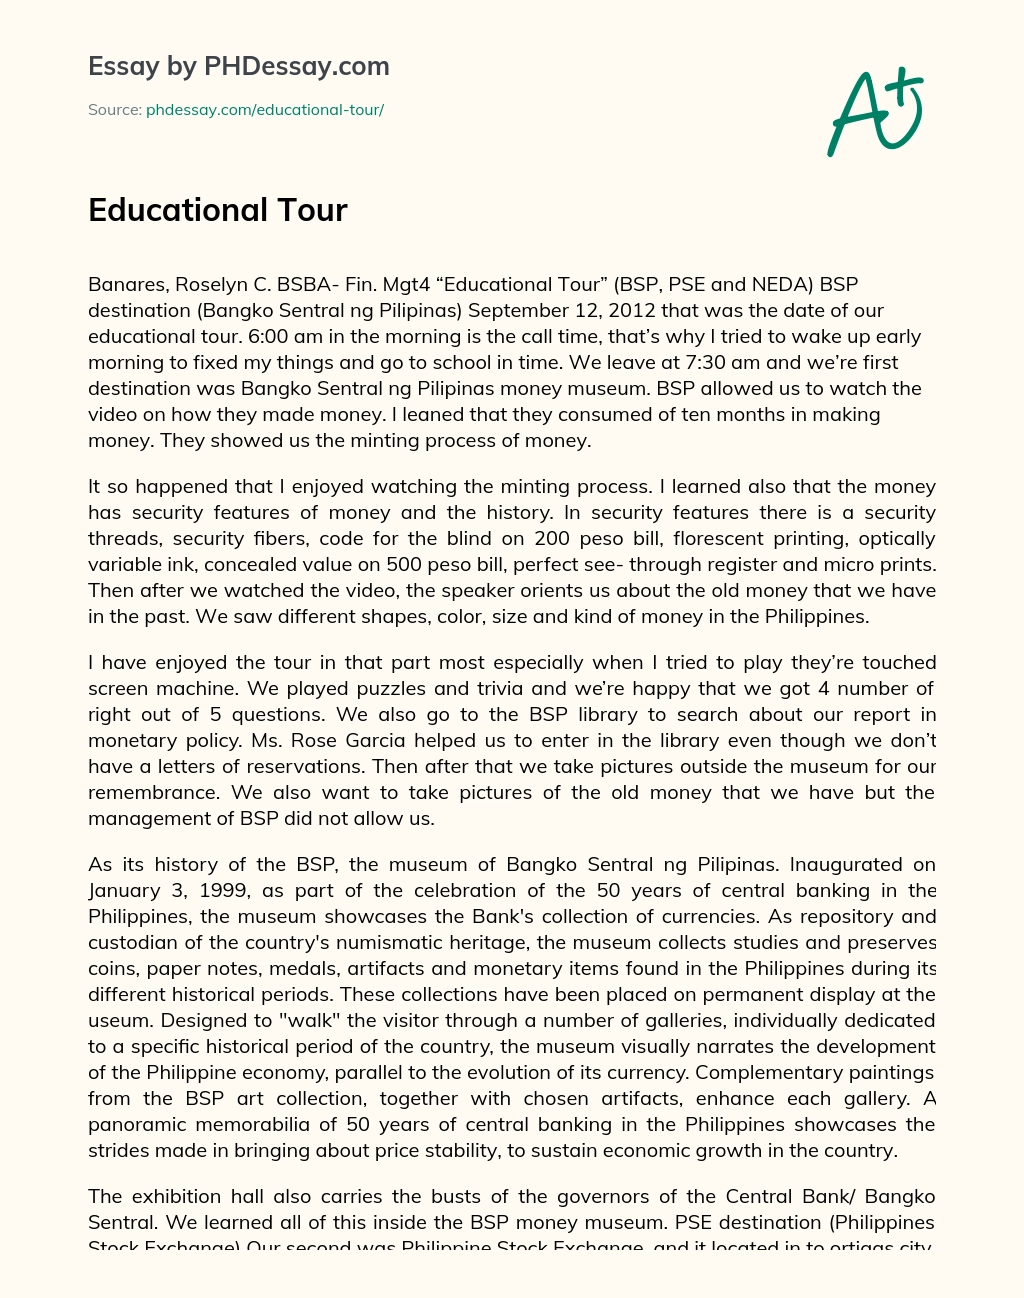 essay on educational tour